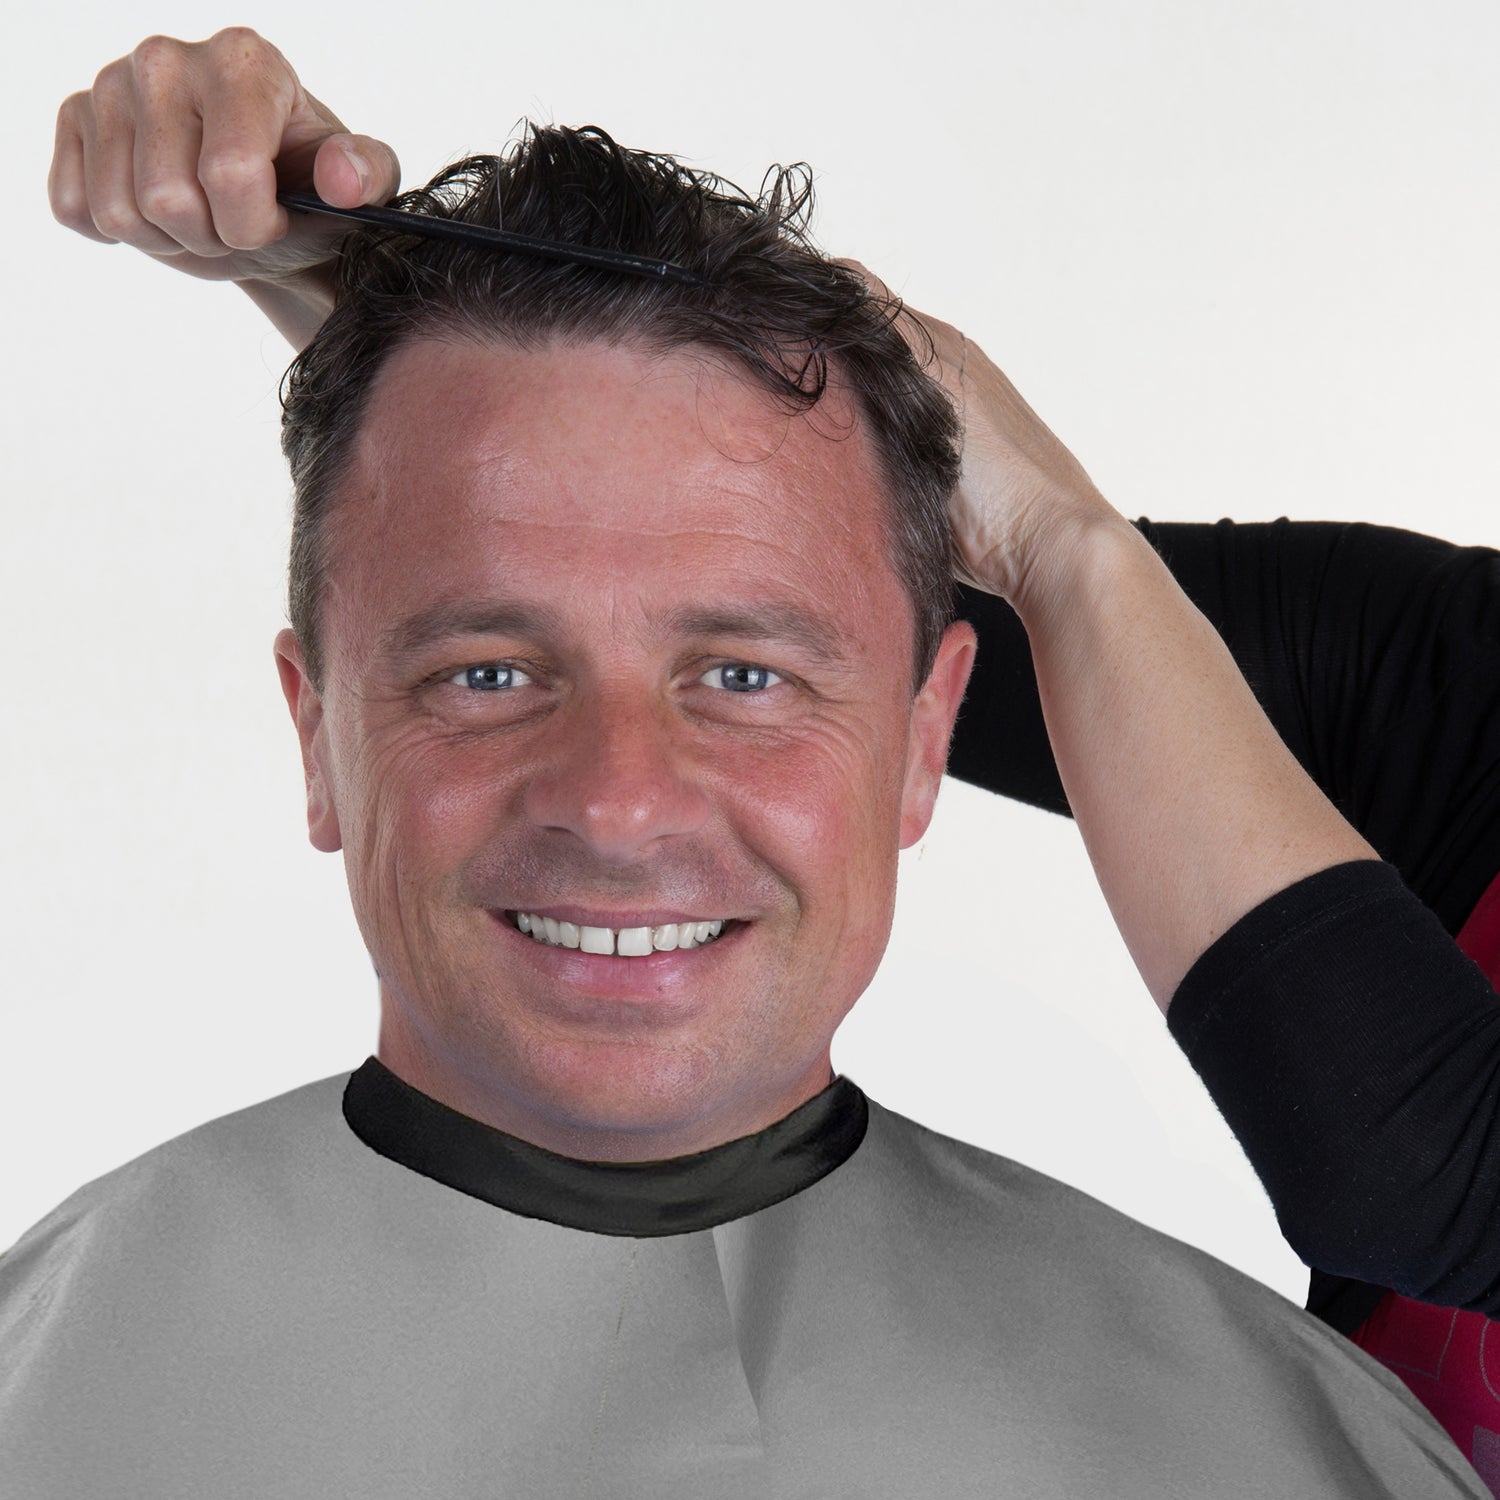 360 Barber Cape - Lightweight Professional Hair Cutting Apron